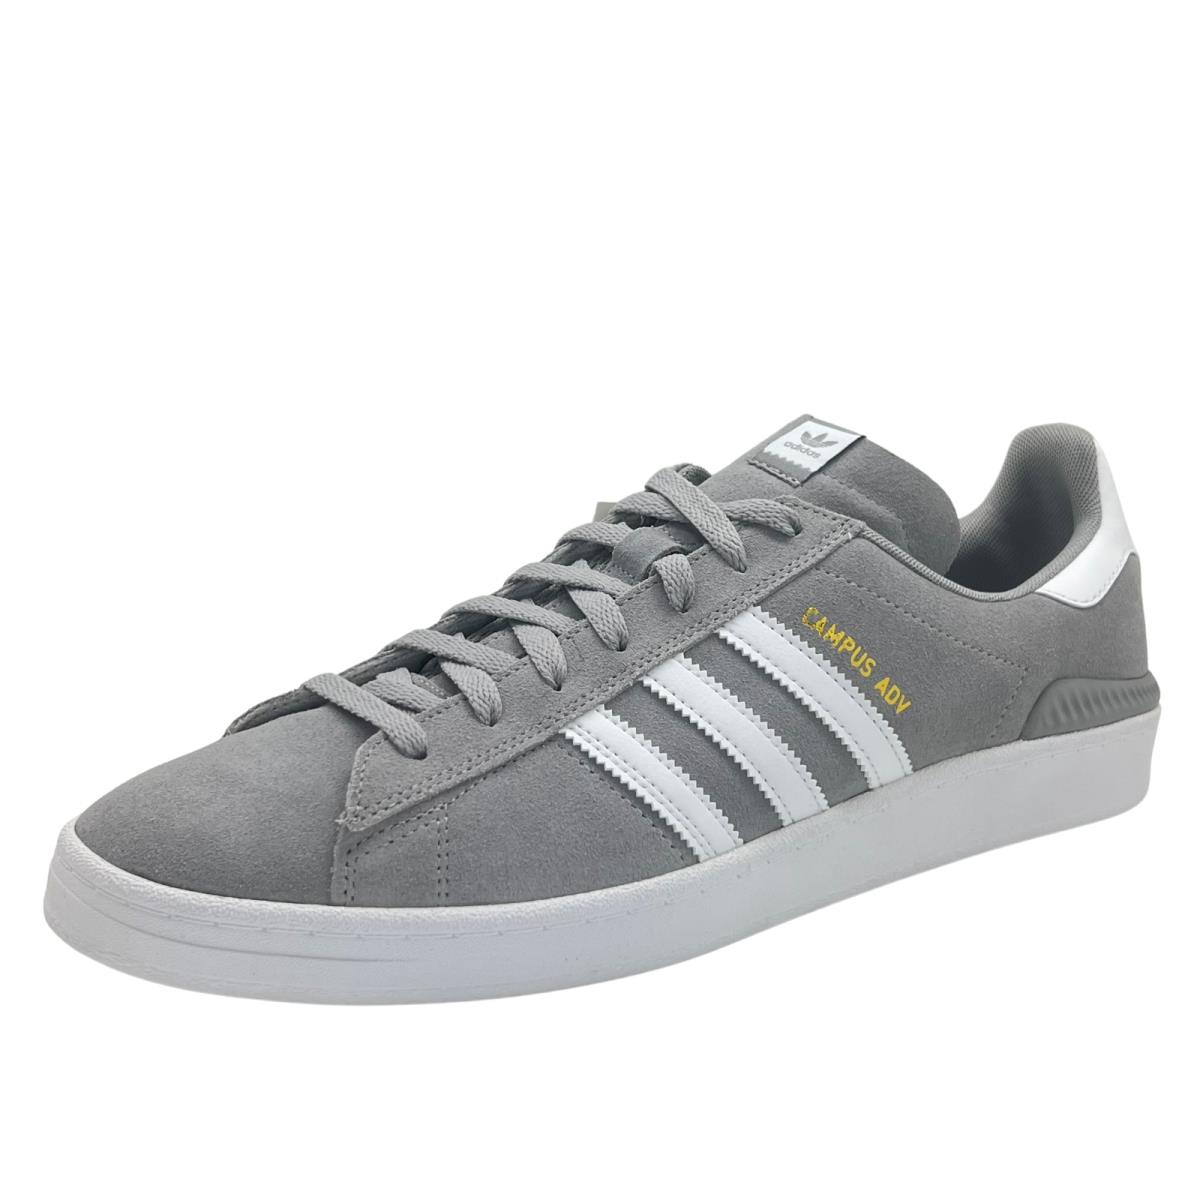 Adidas Campus Adv Men`s Skate Shoes Grey Size US 14 - Gray